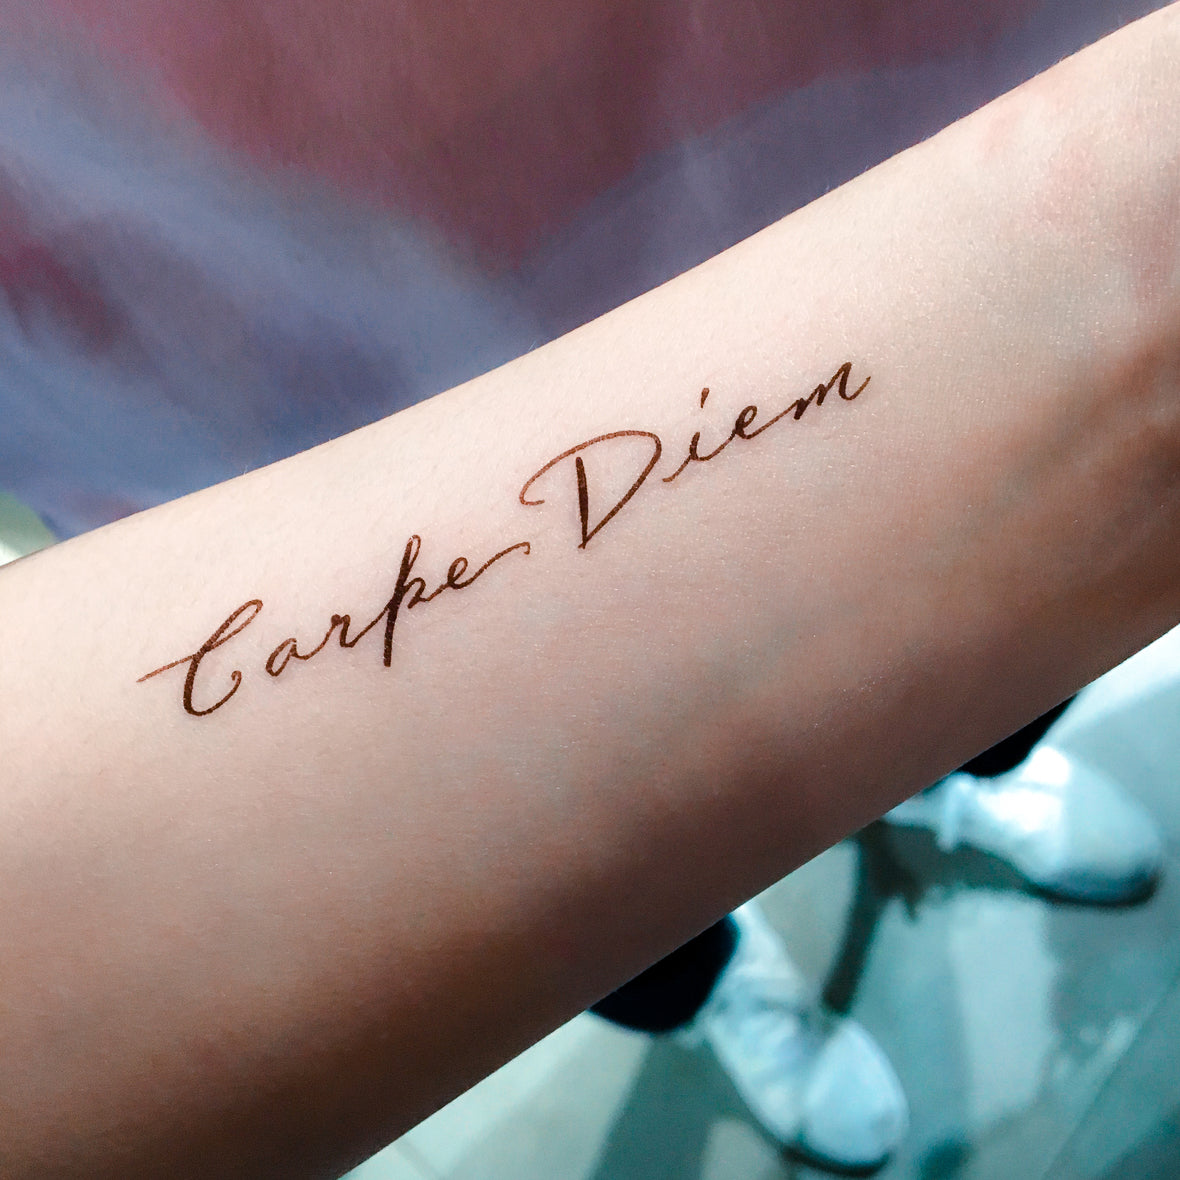 Carpe diem lettering tattoo located on the inner